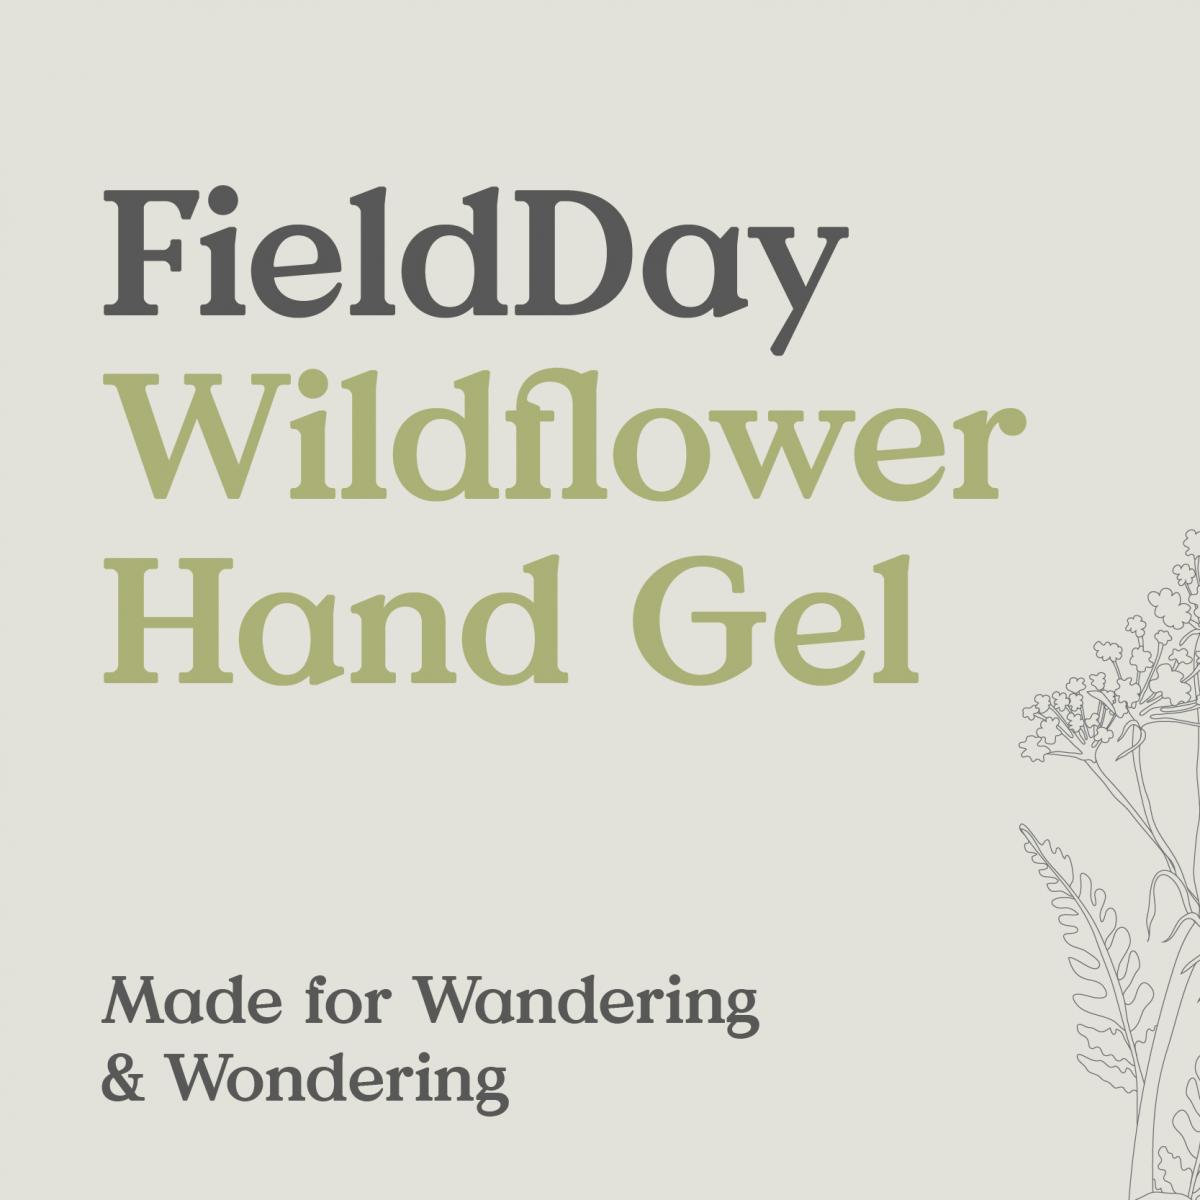 FREE WildFlower Hand Gel anyone?